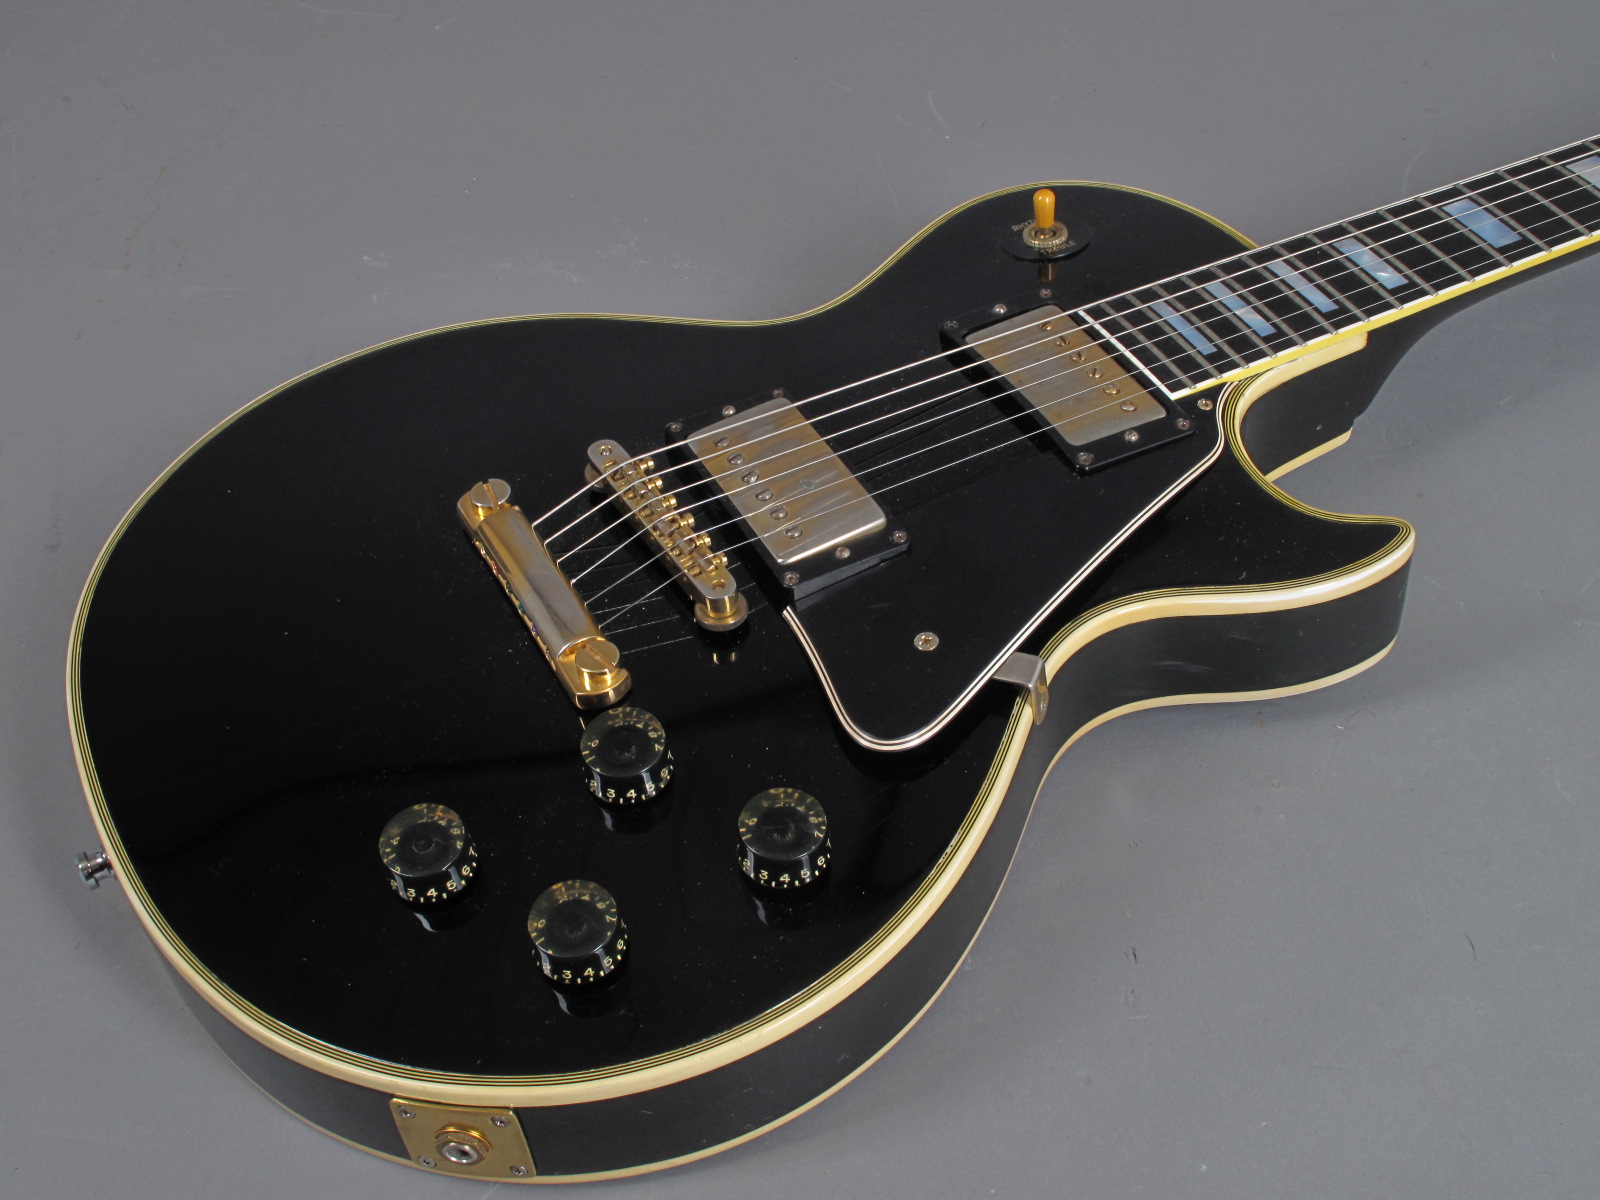 Gibson Les Paul Custom 1974 Black Beauty Guitar For Sale Guitarpoint